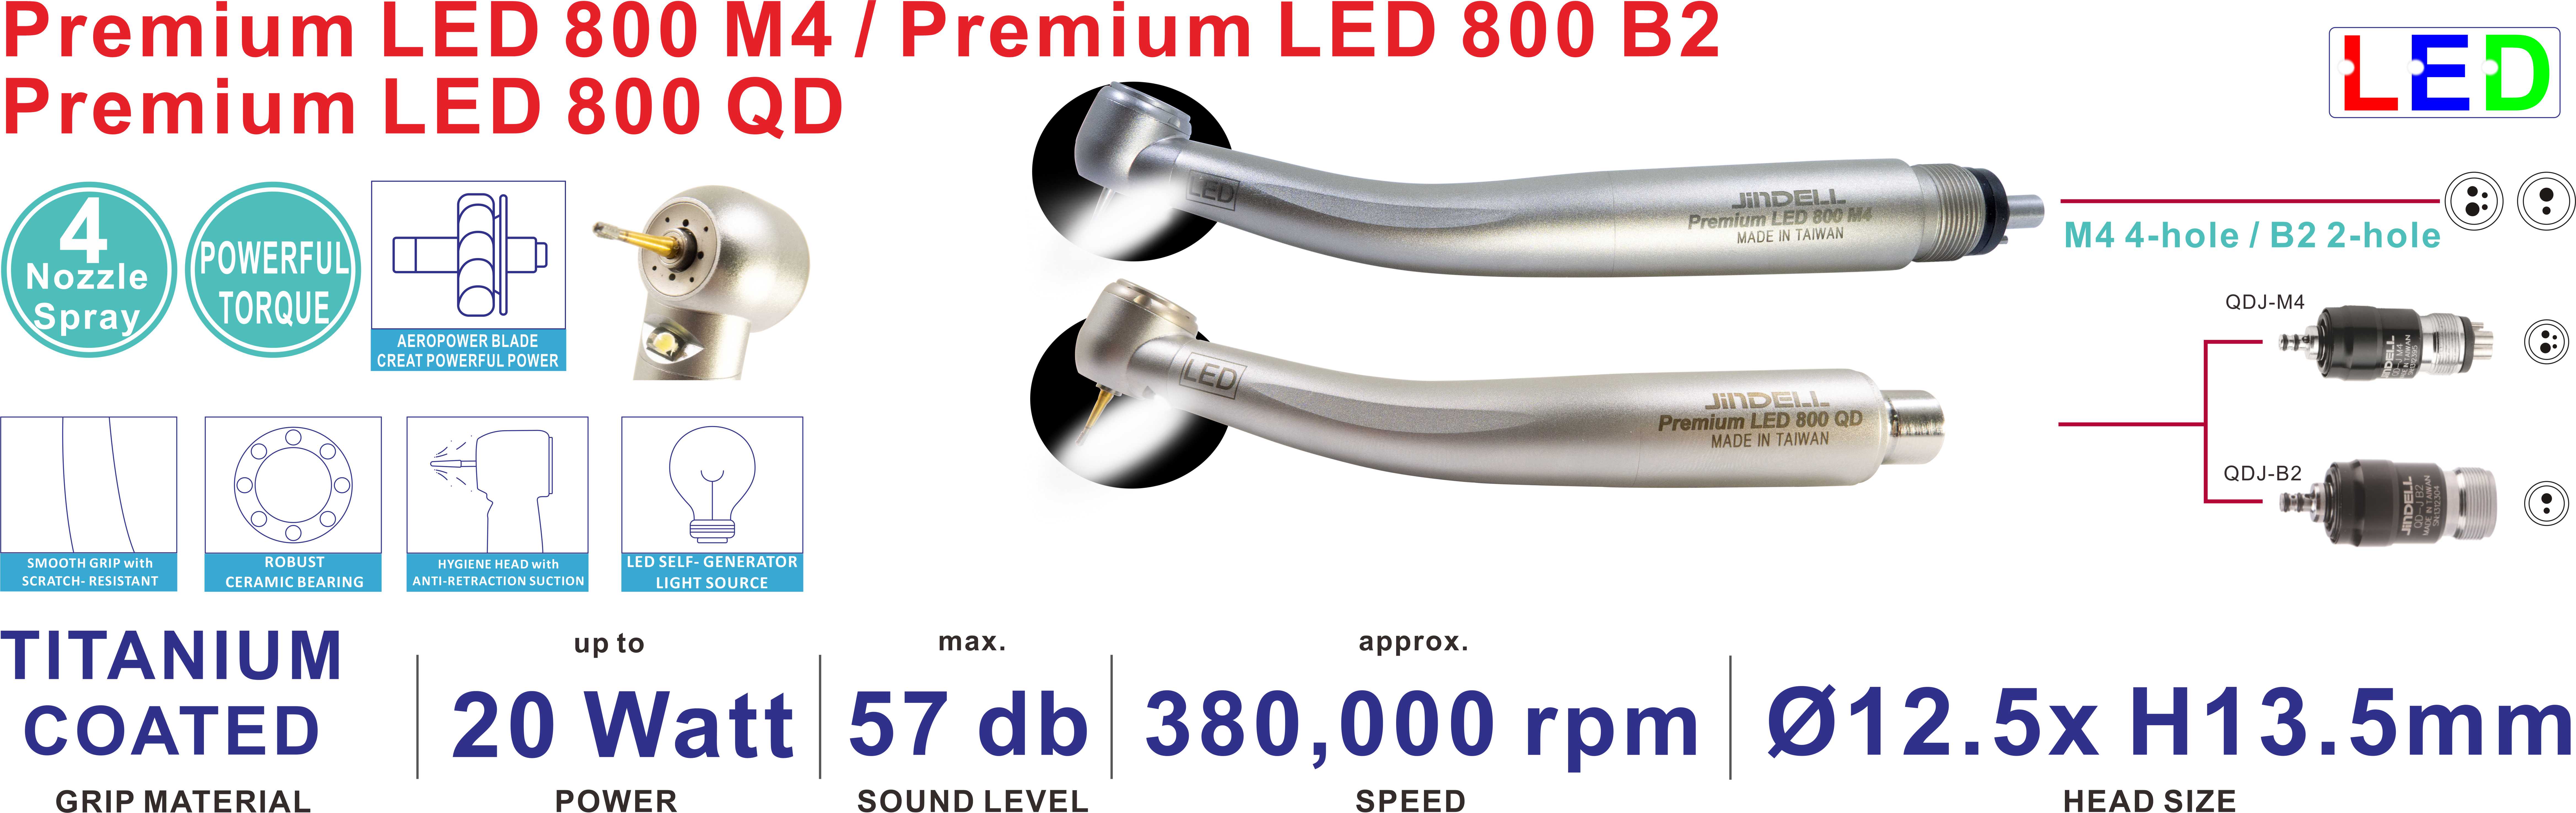 Premium LED 800 series Turbine Handpiece